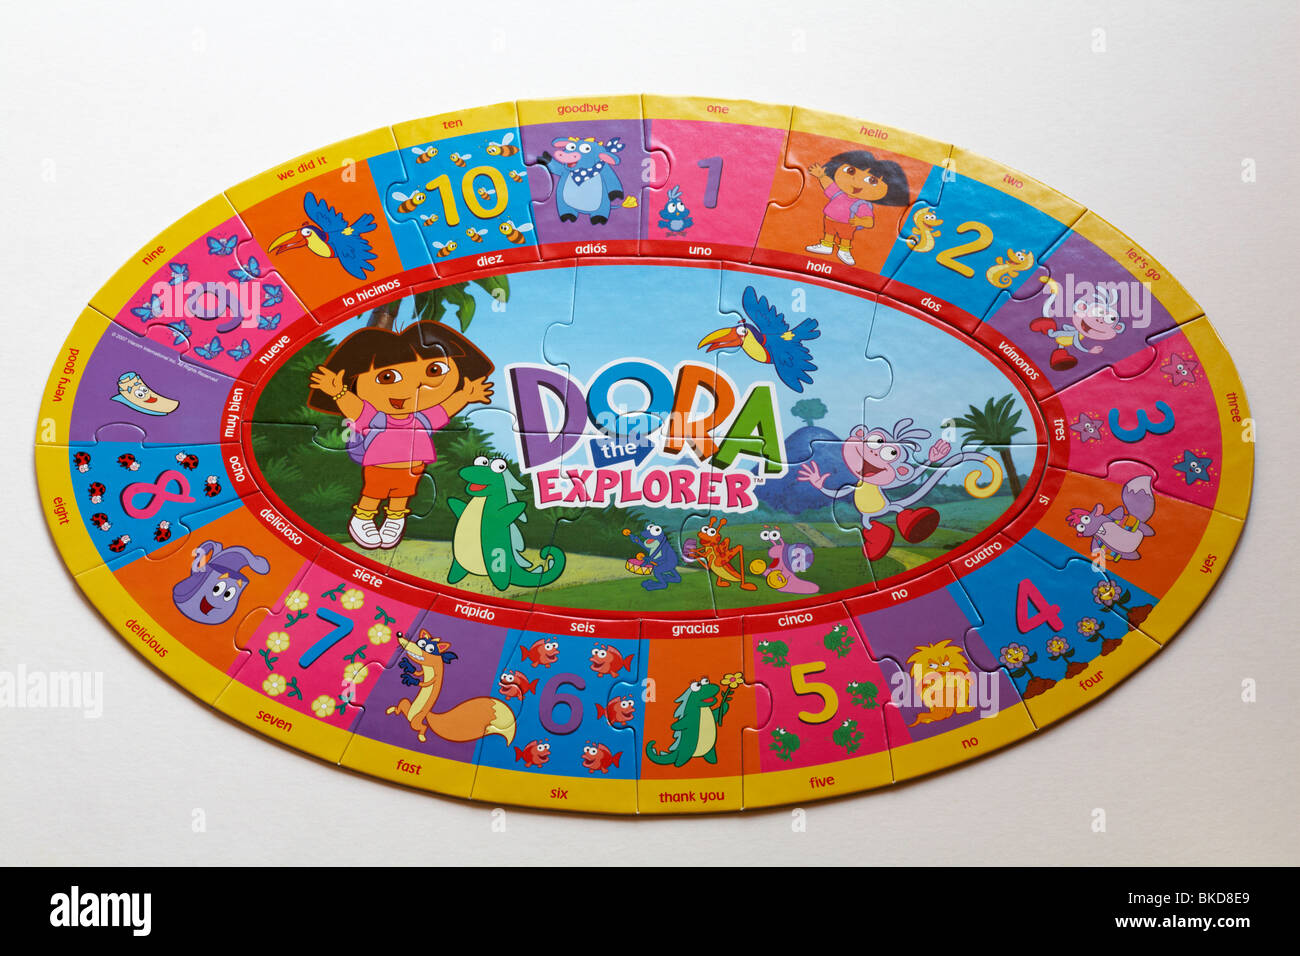 Dora the Explorer jigsaw puzzle Stock Photo - Alamy